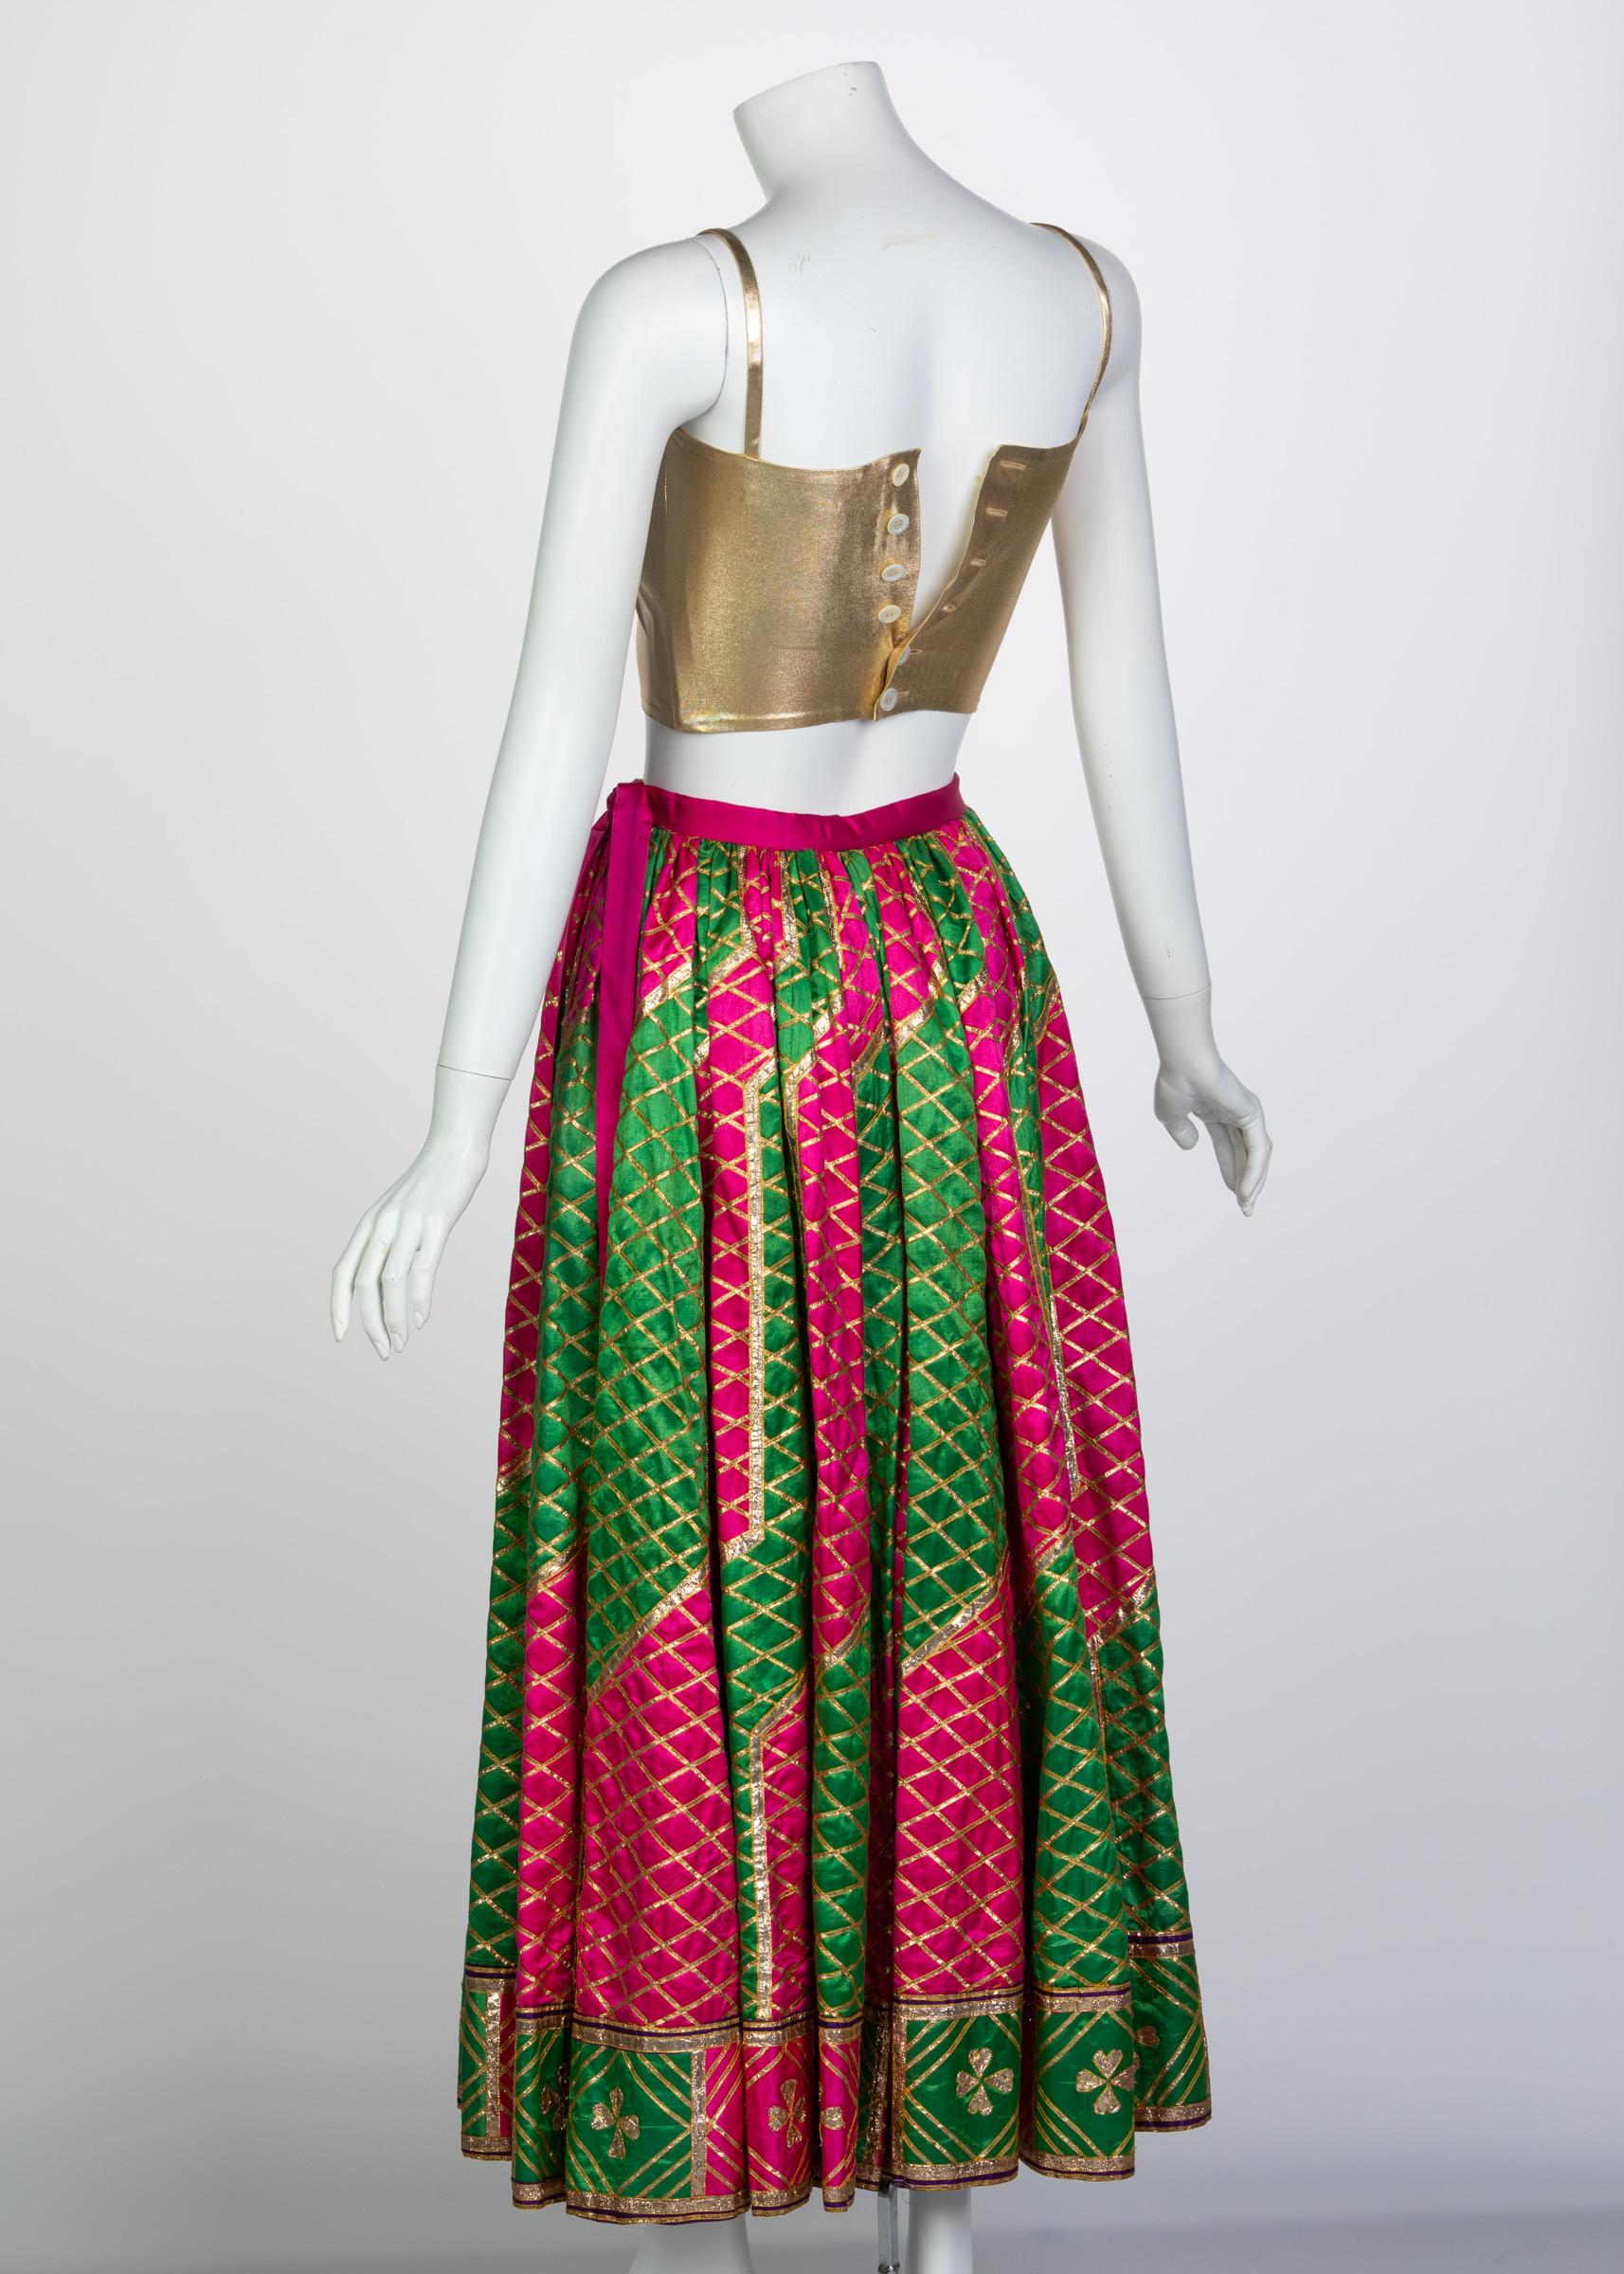 Lanvin Haute Couture Gold Lame Top & Green Pink Peasant Skirt Ensemble, 1977 3